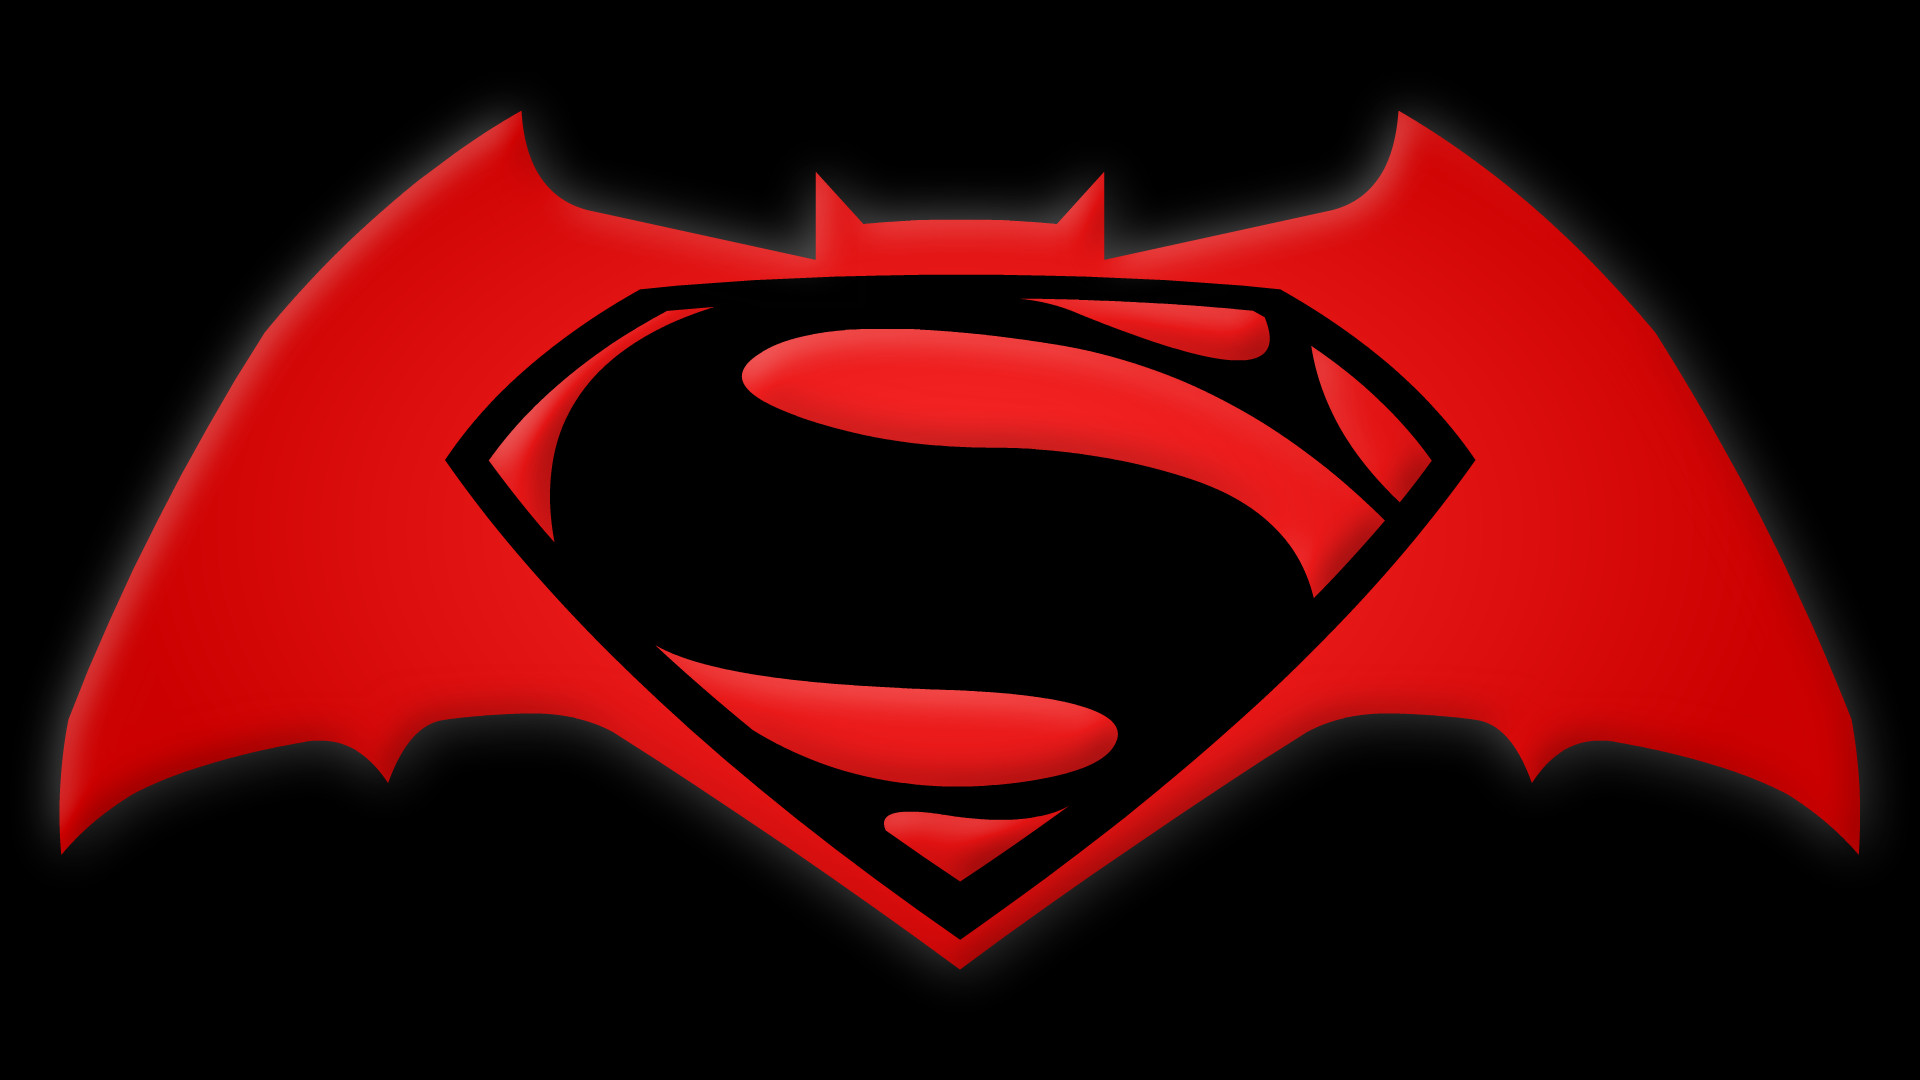 1920x1080 Batman v Superman Symbol by Yurtigo Batman v Superman Symbol by Yurtigo